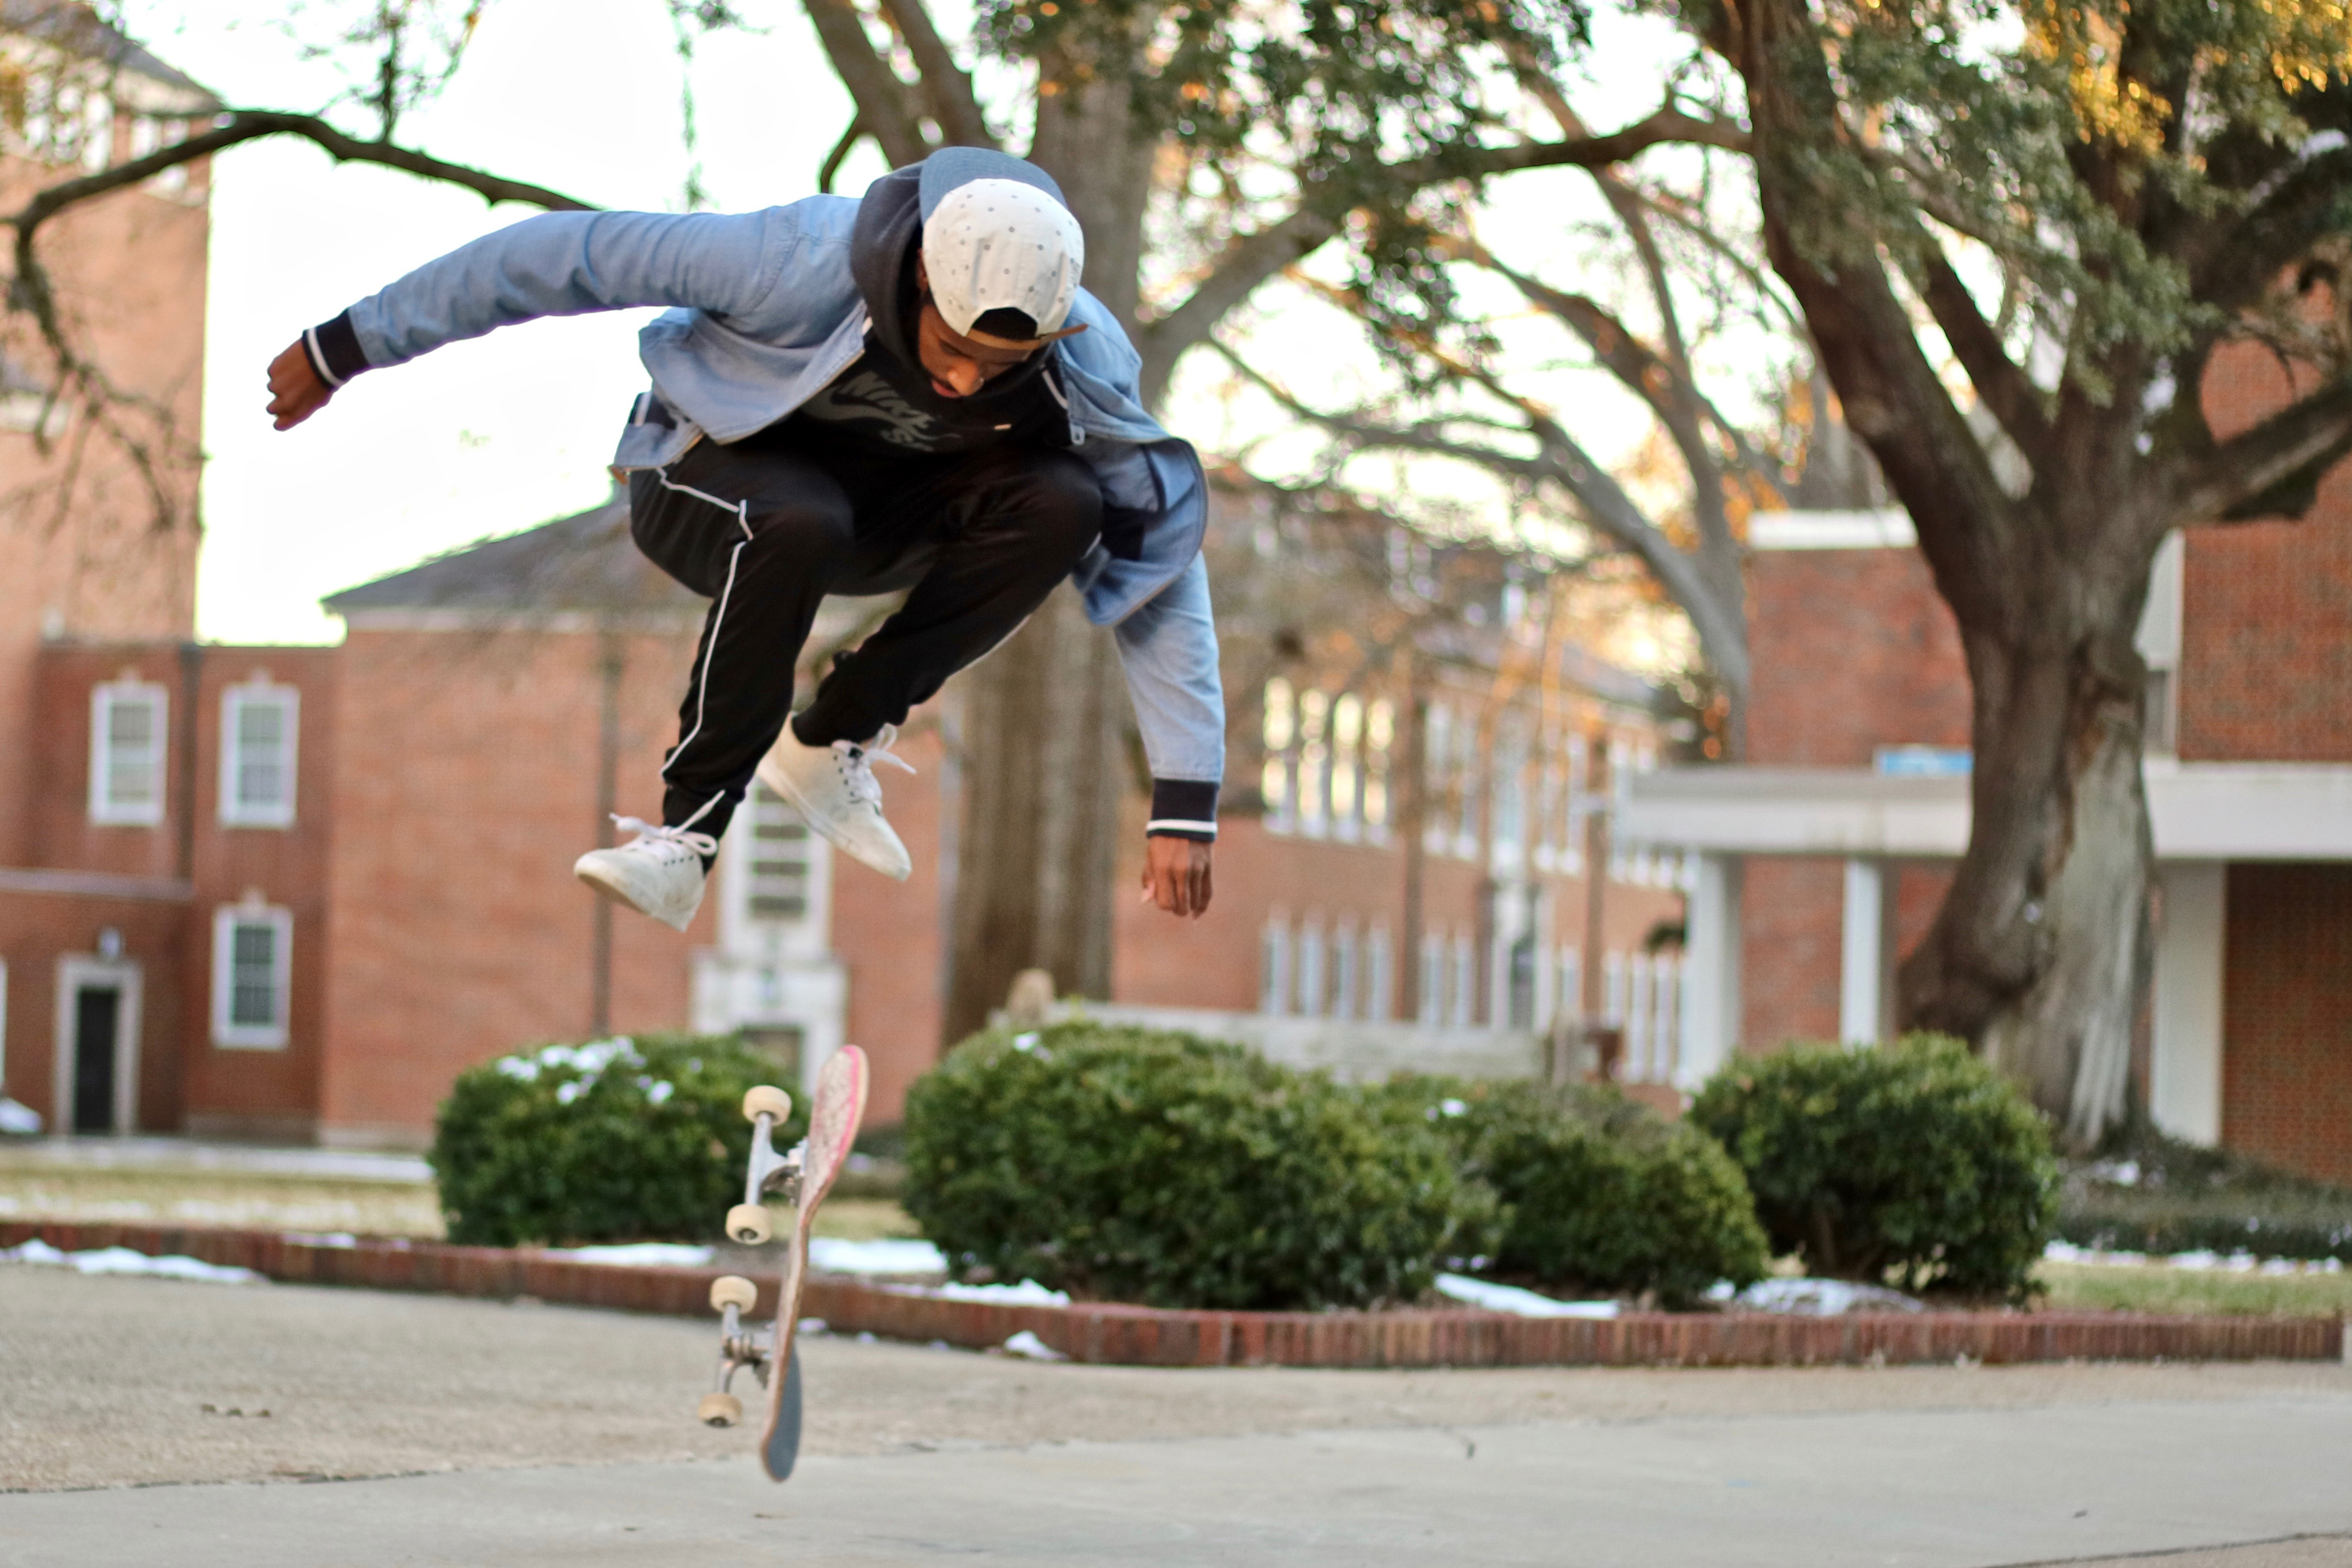 man-doing-jump-trick-on-skateboard image - Free stock photo - Public Domain photo - CC0 Images